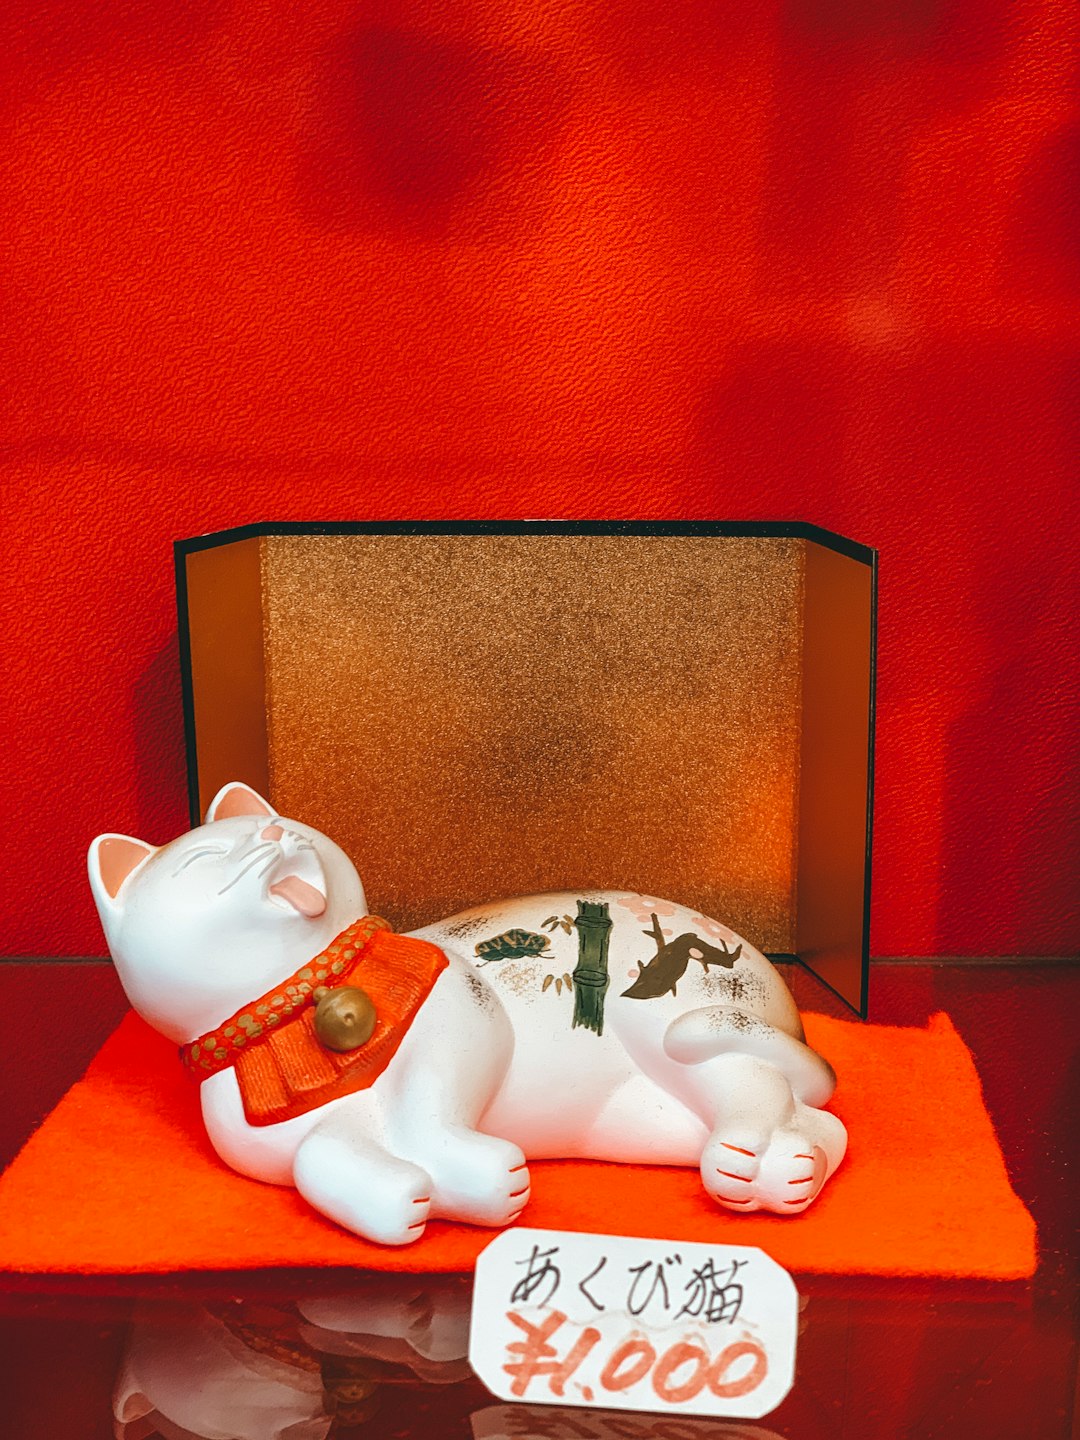 white cat figurine